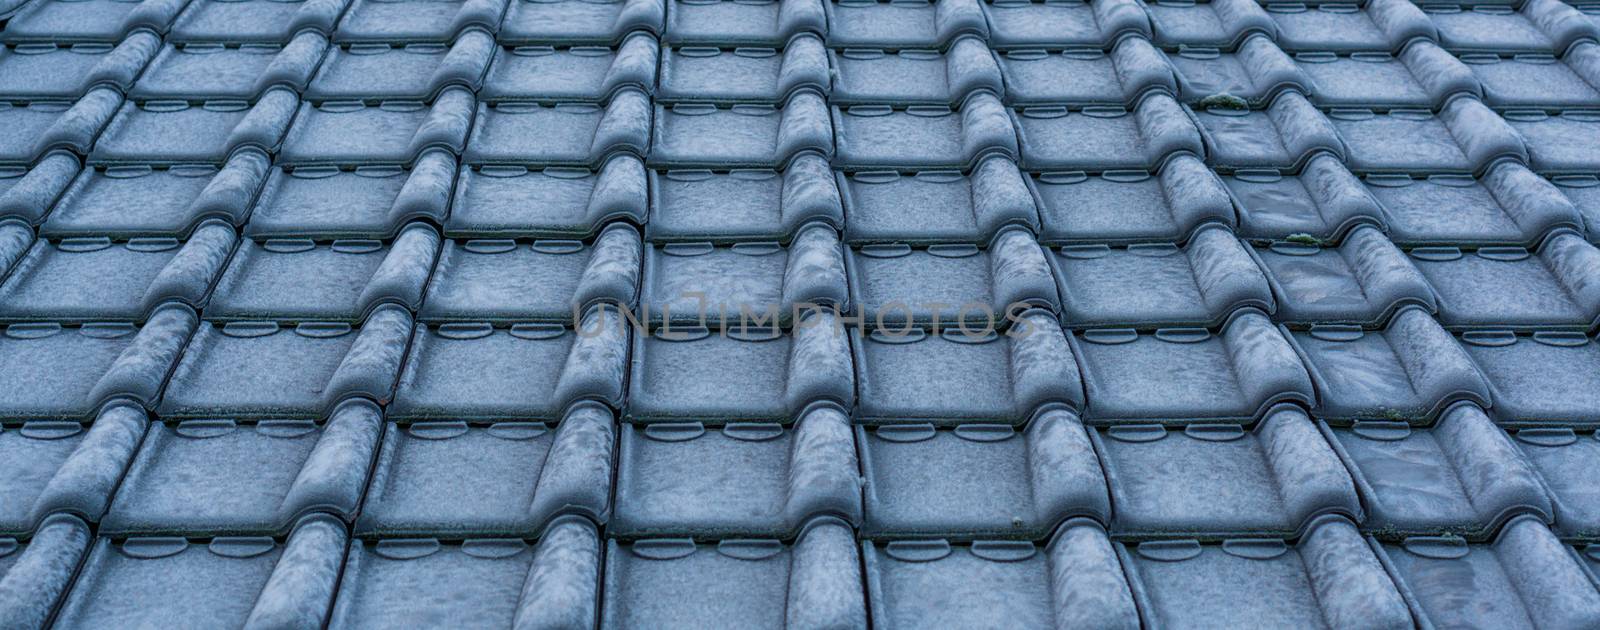 pattern of frozen rooftop tiling in macro closeup, cold winter season, architecture background by charlottebleijenberg